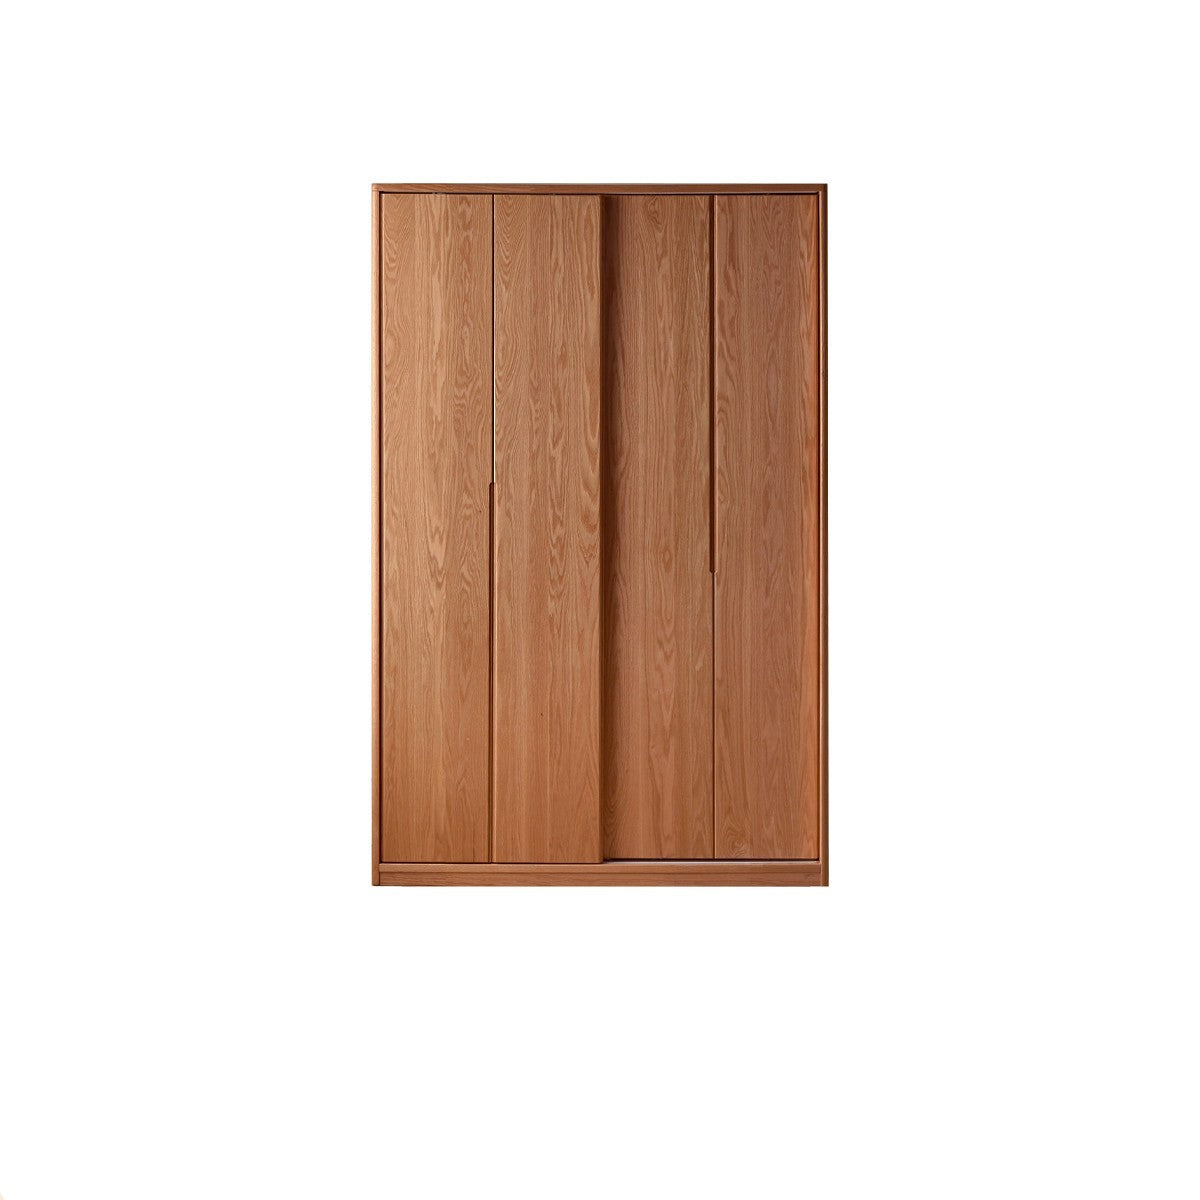 Oak Solid Wood Sliding Door Wardrobe"